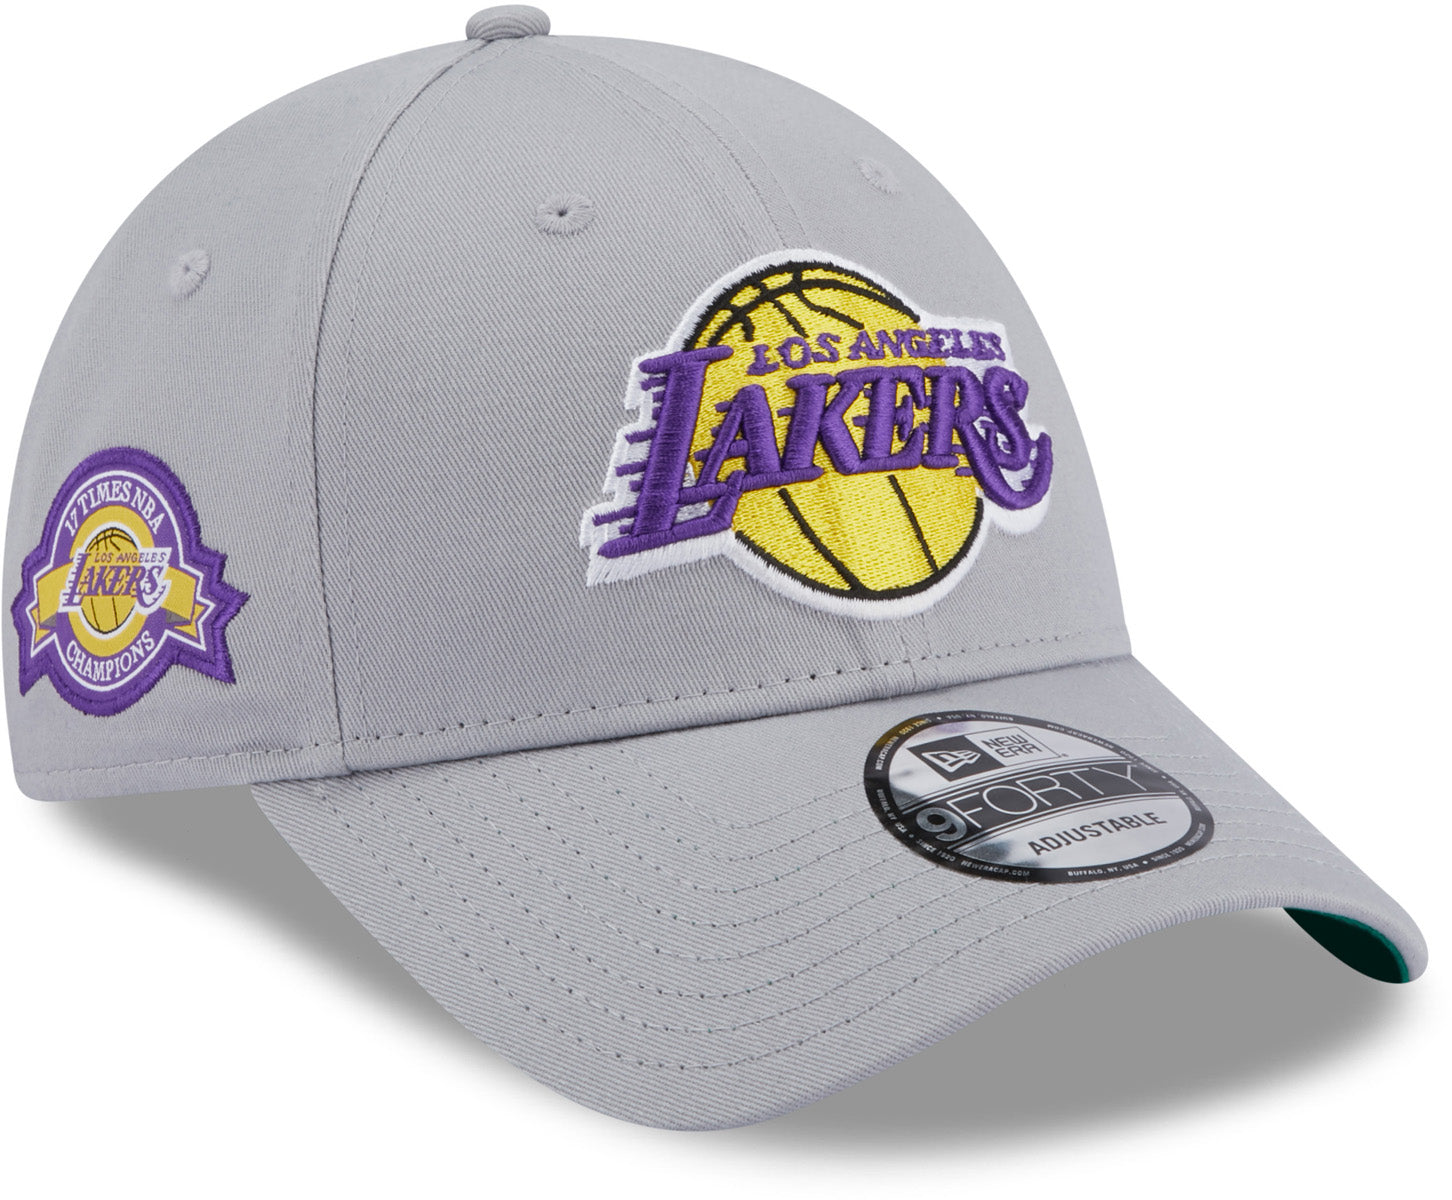 New Era NBA LA Lakers adjustable trucker cap in black